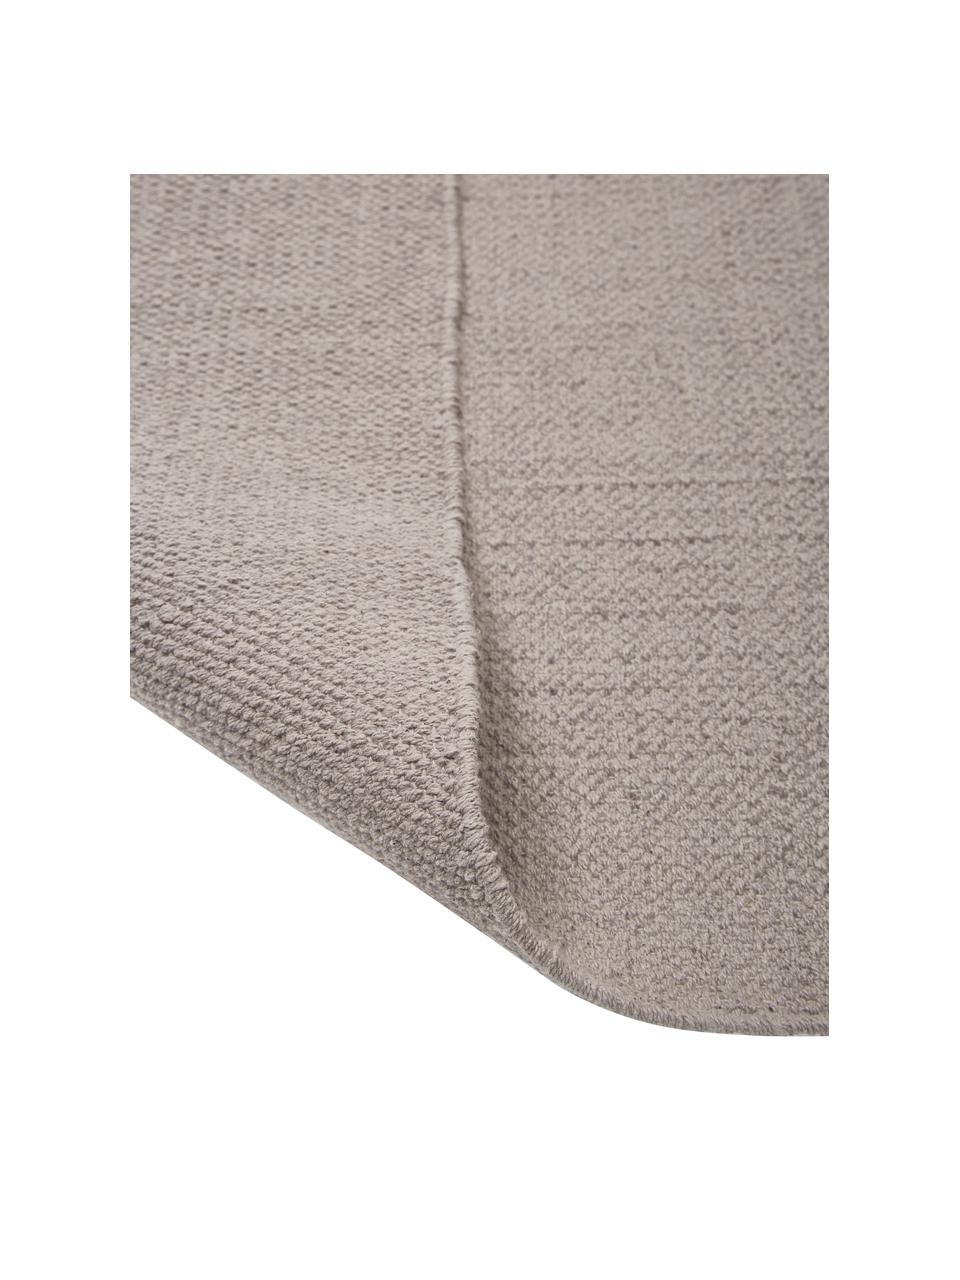 Dünner Baumwollläufer Agneta in Grau, handgewebt, 100% Baumwolle, Grau, 70 x 250 cm